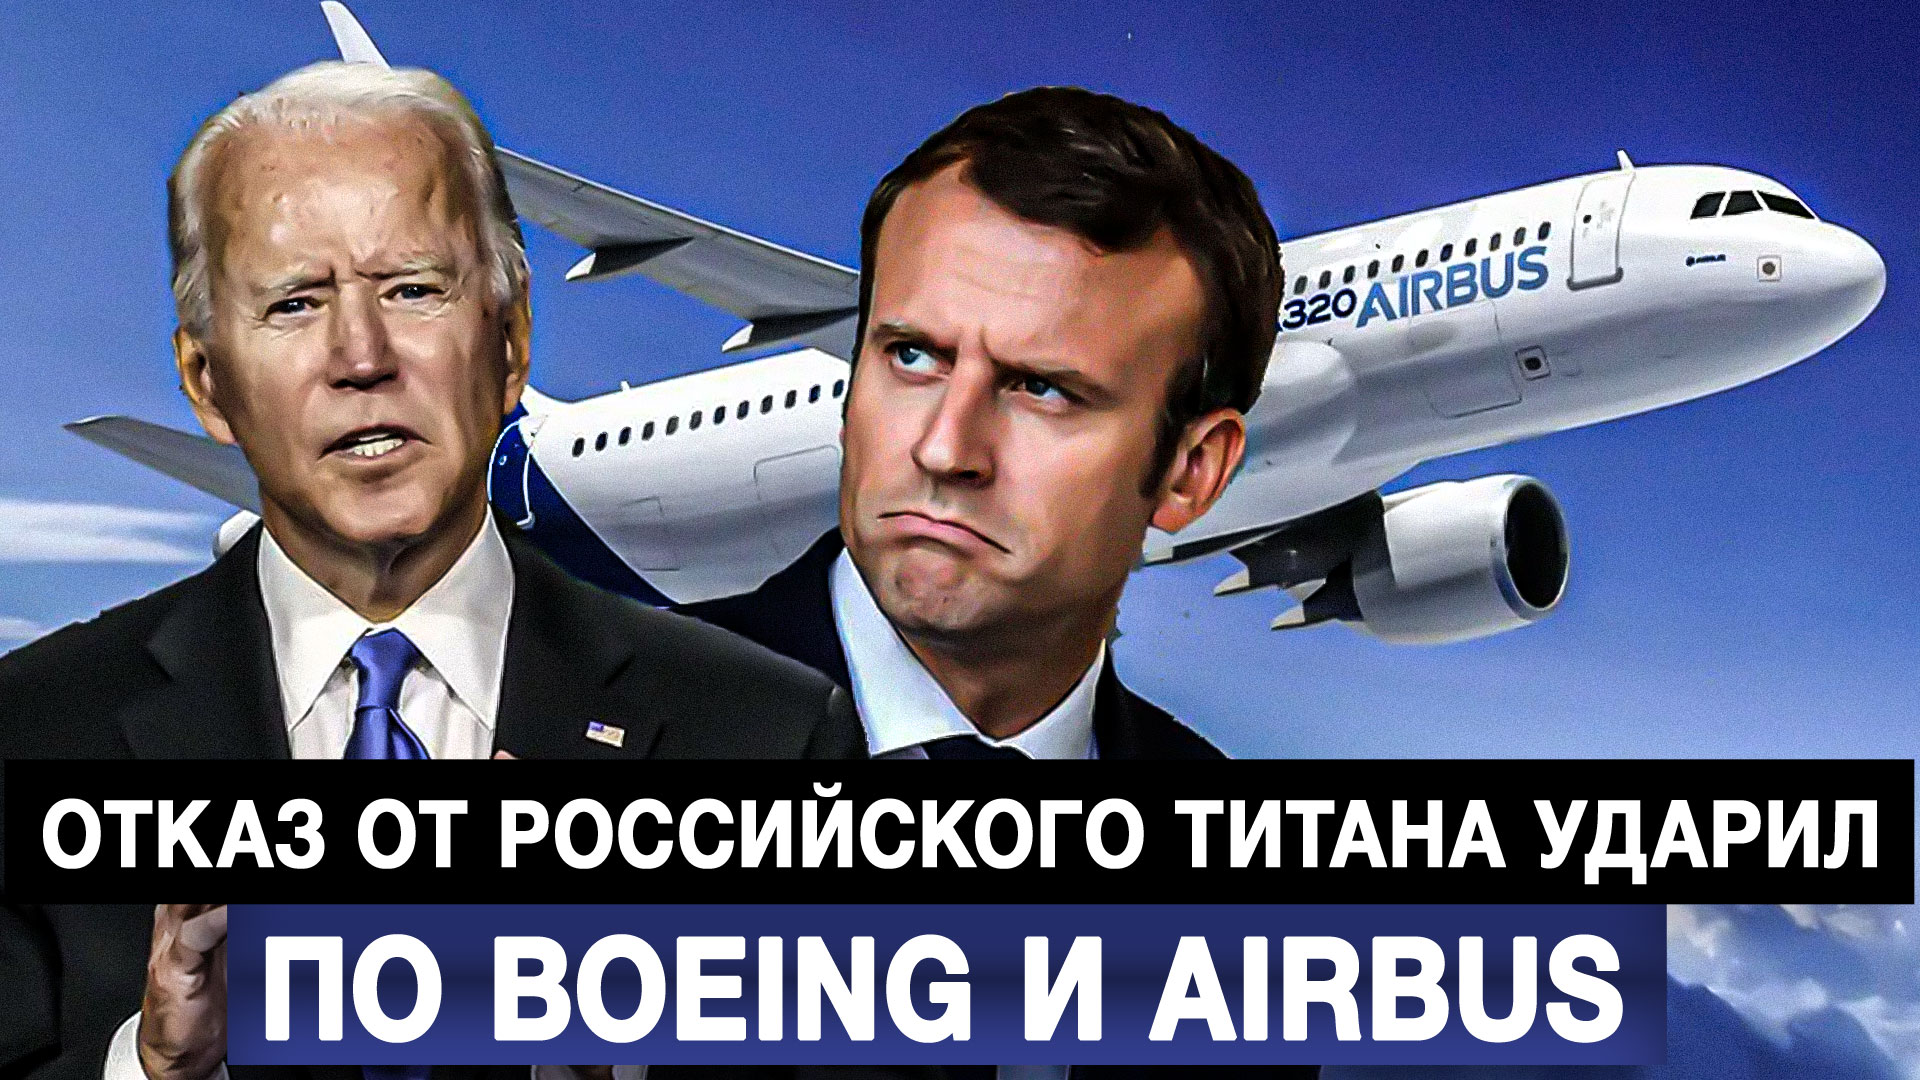 Отказ от российского титана ударил по Boeing и Airbus